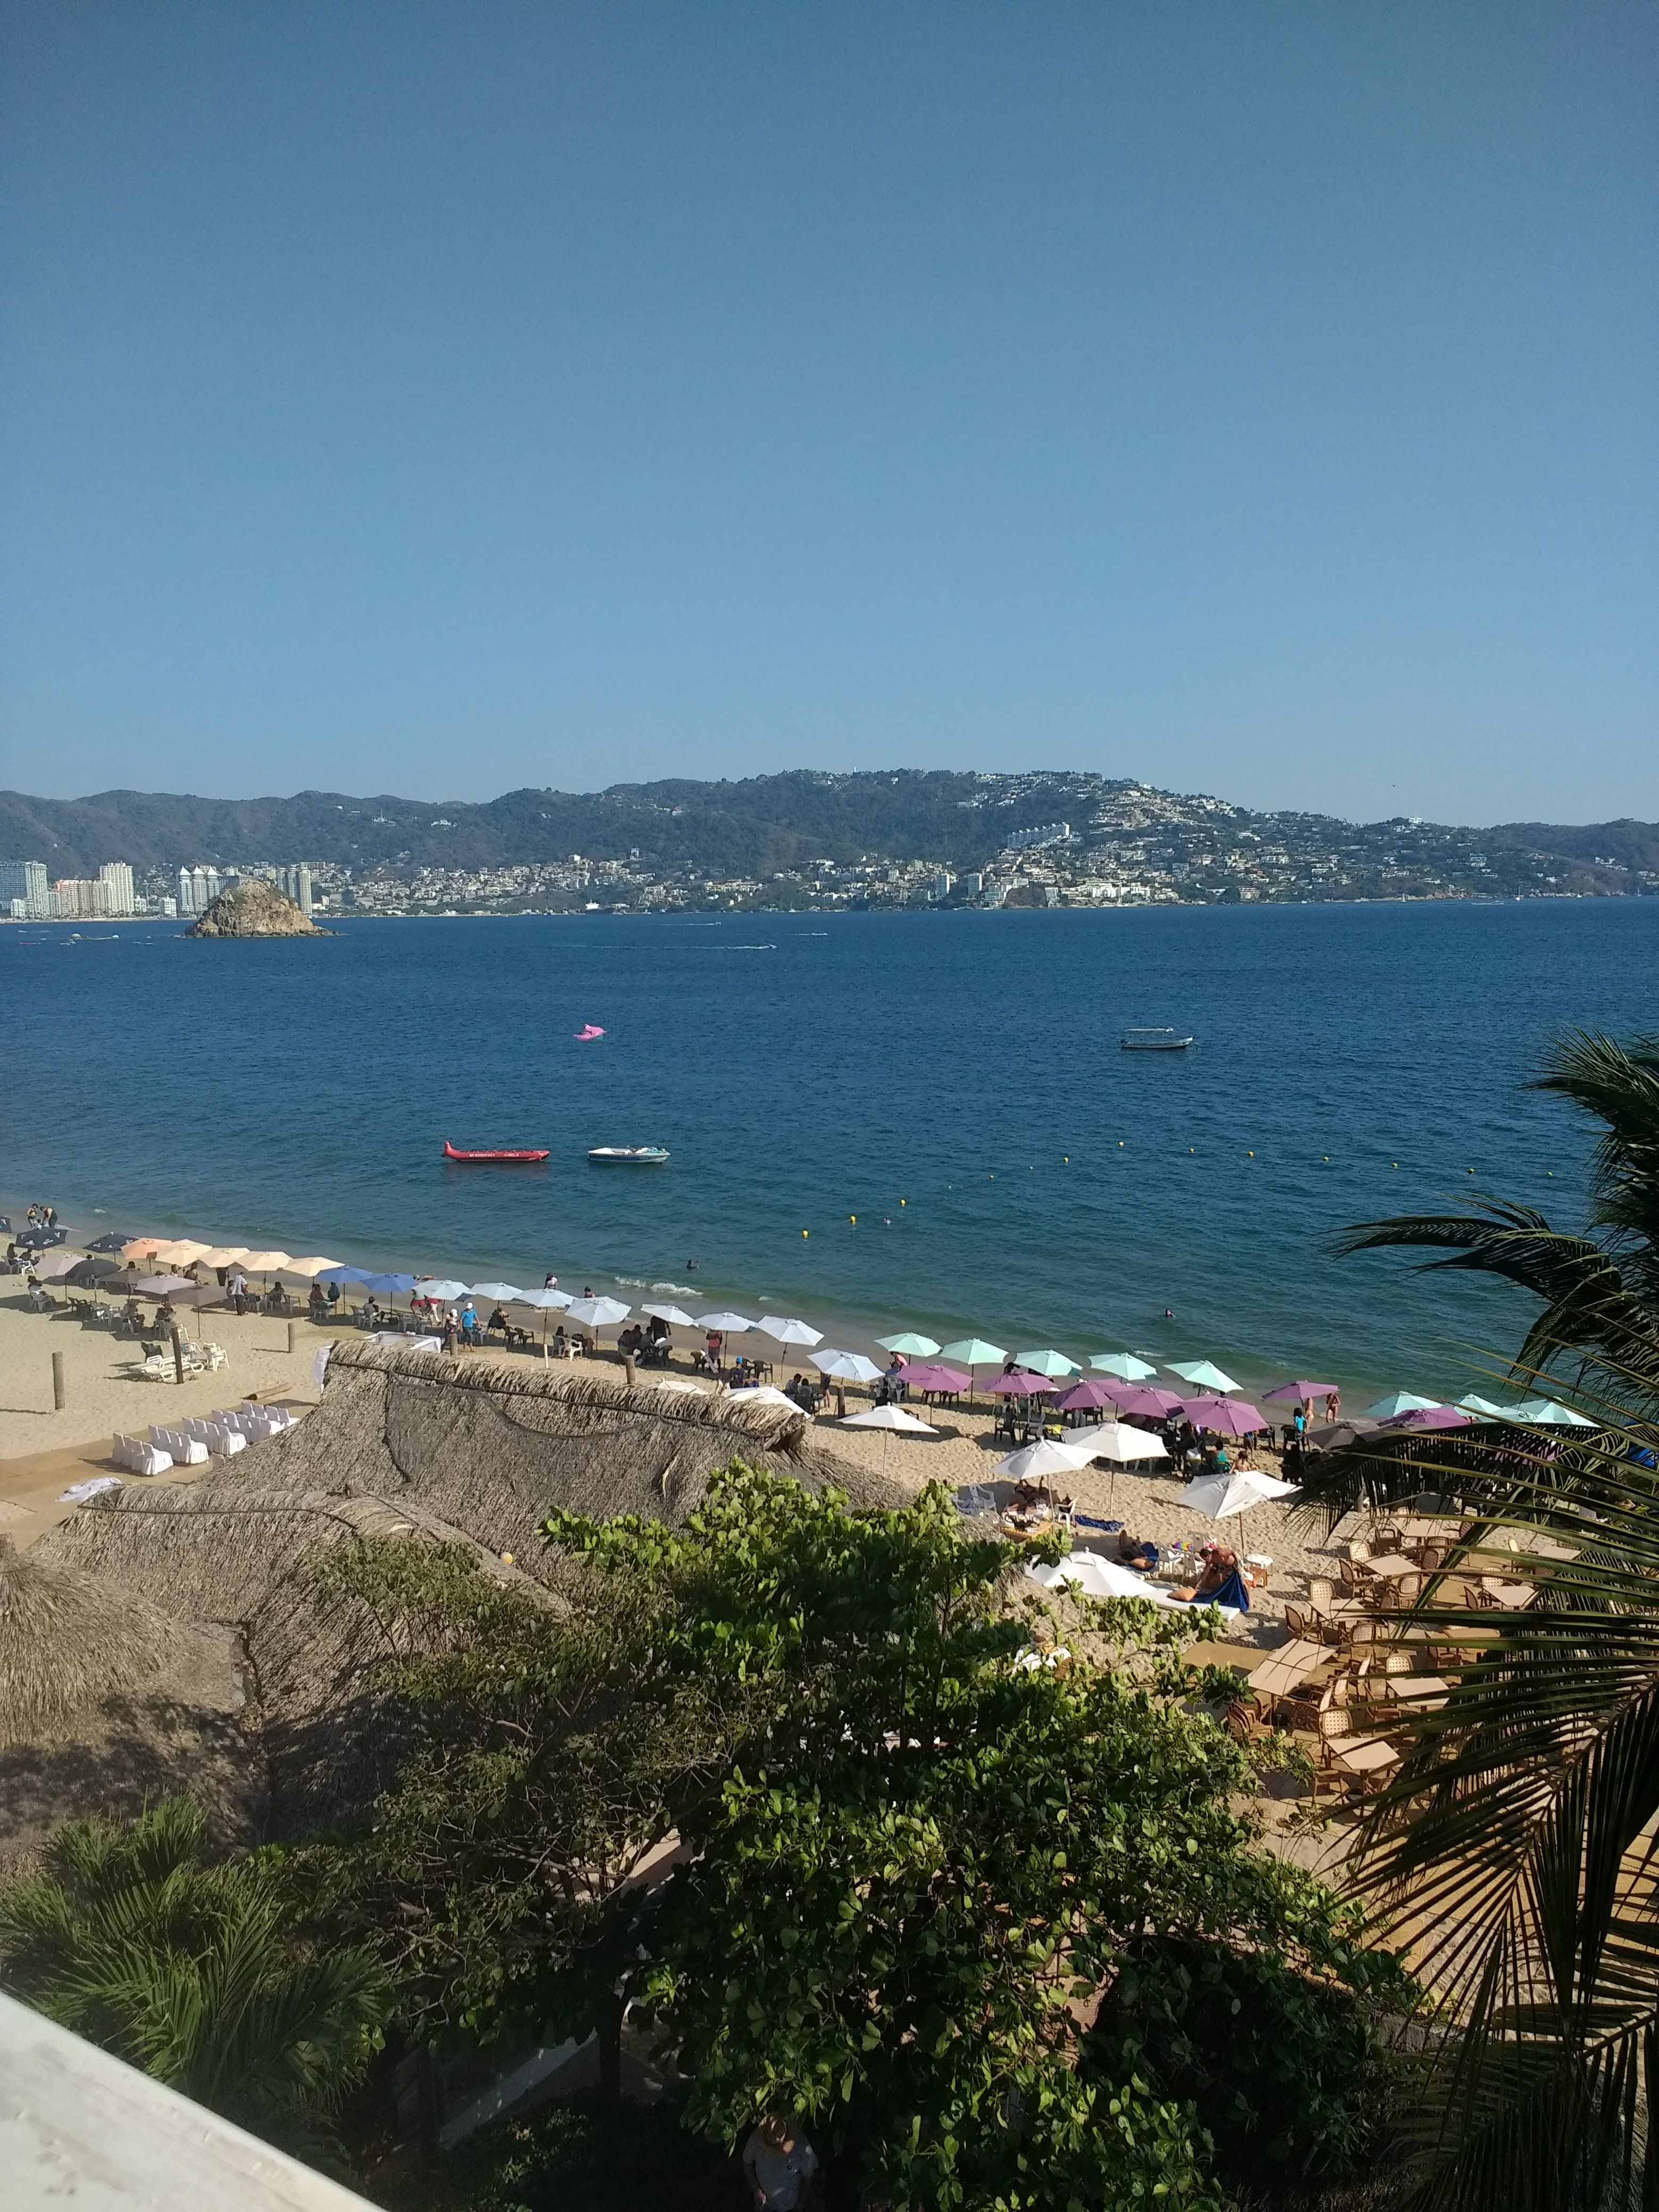 Fotografia tomada desde Hotel Krystal beach Acapulco , realmente hermoso